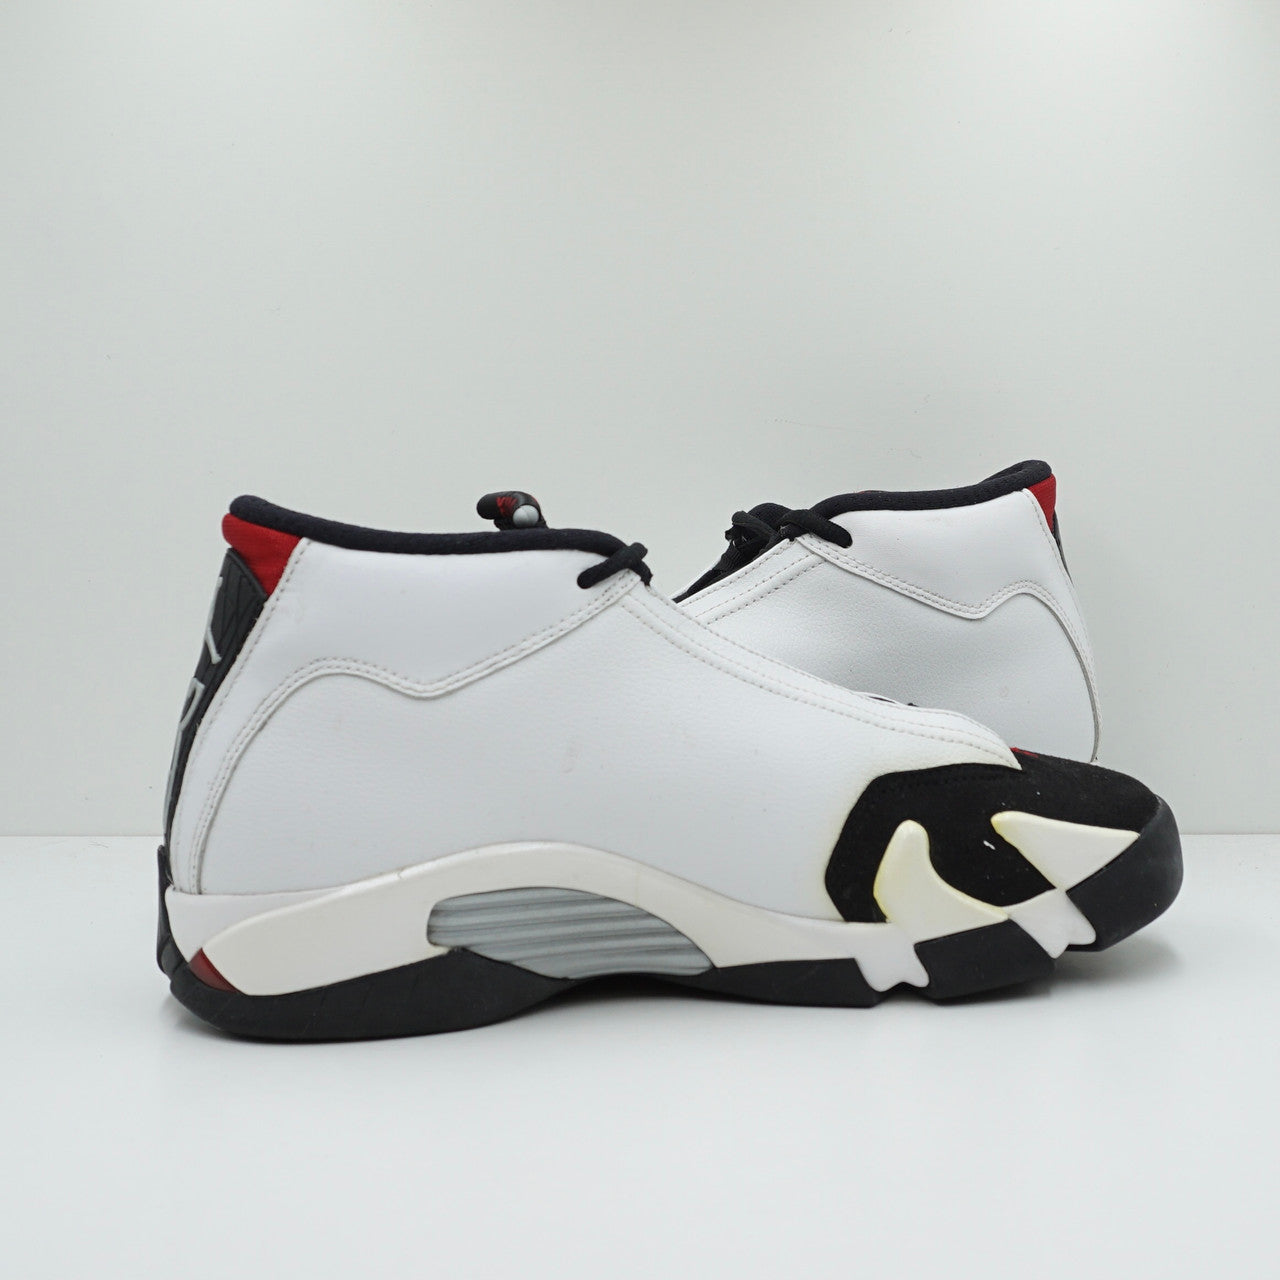 Jordan 14 Retro Black Toe (2014) (GS)